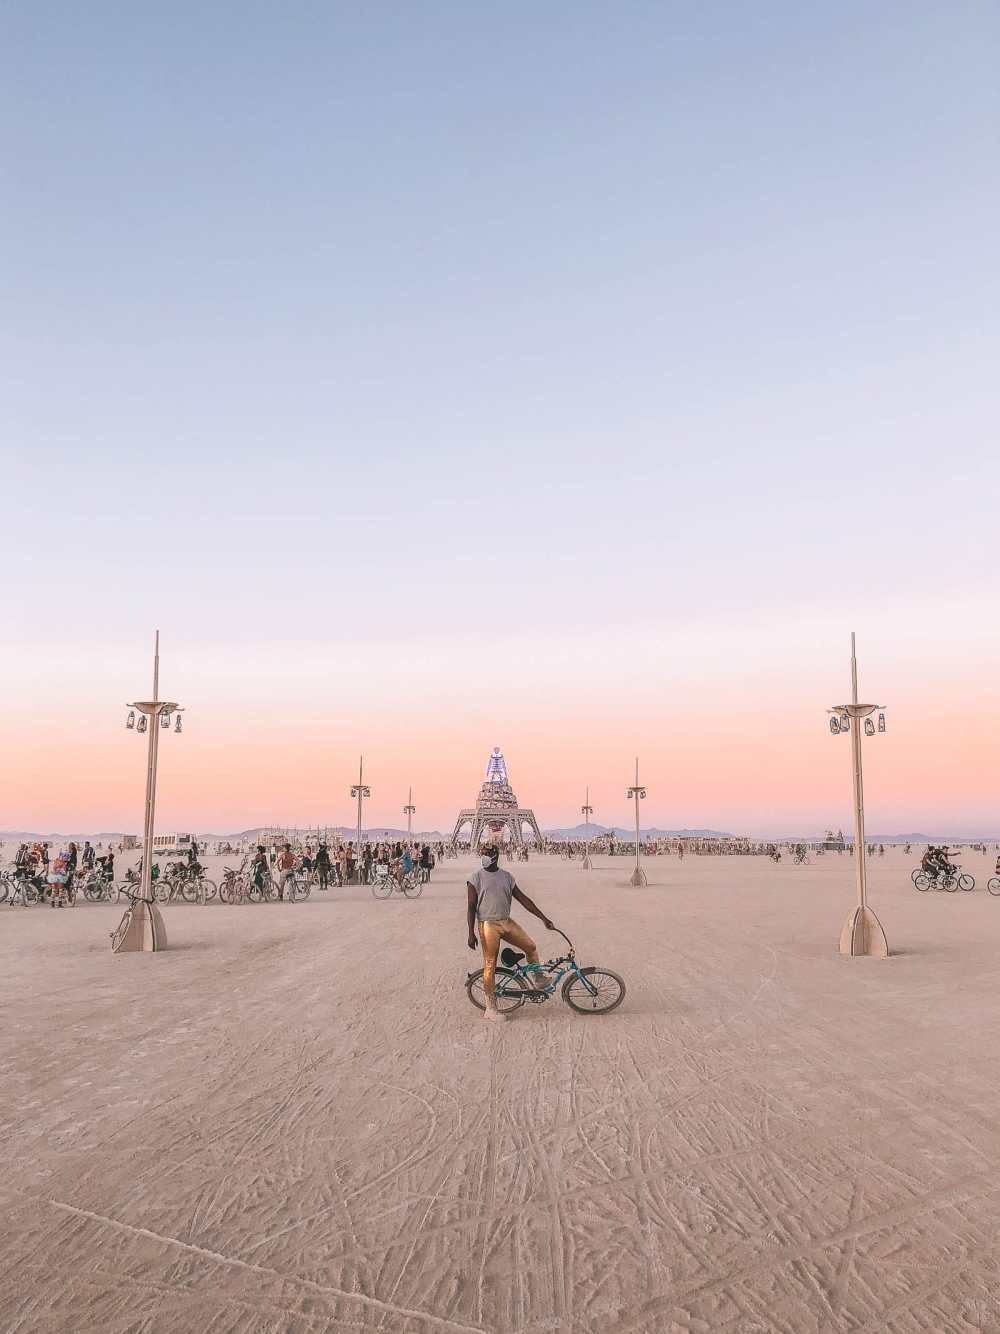  Руководство для новичков по Burning Man (7) 